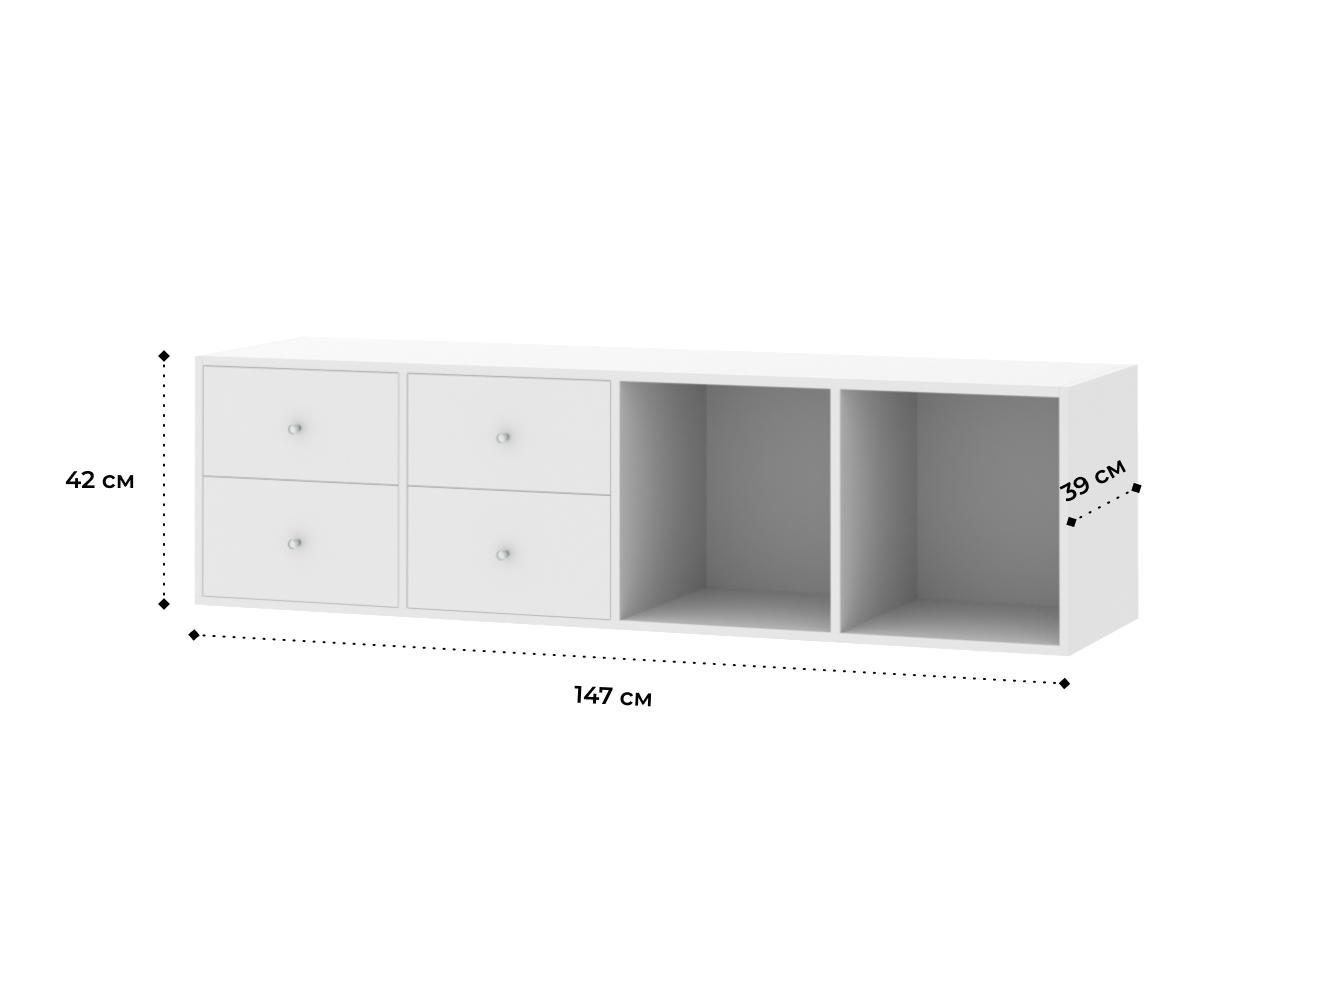  Подвесная тумба Билли 522 white ИКЕА (IKEA) изображение товара